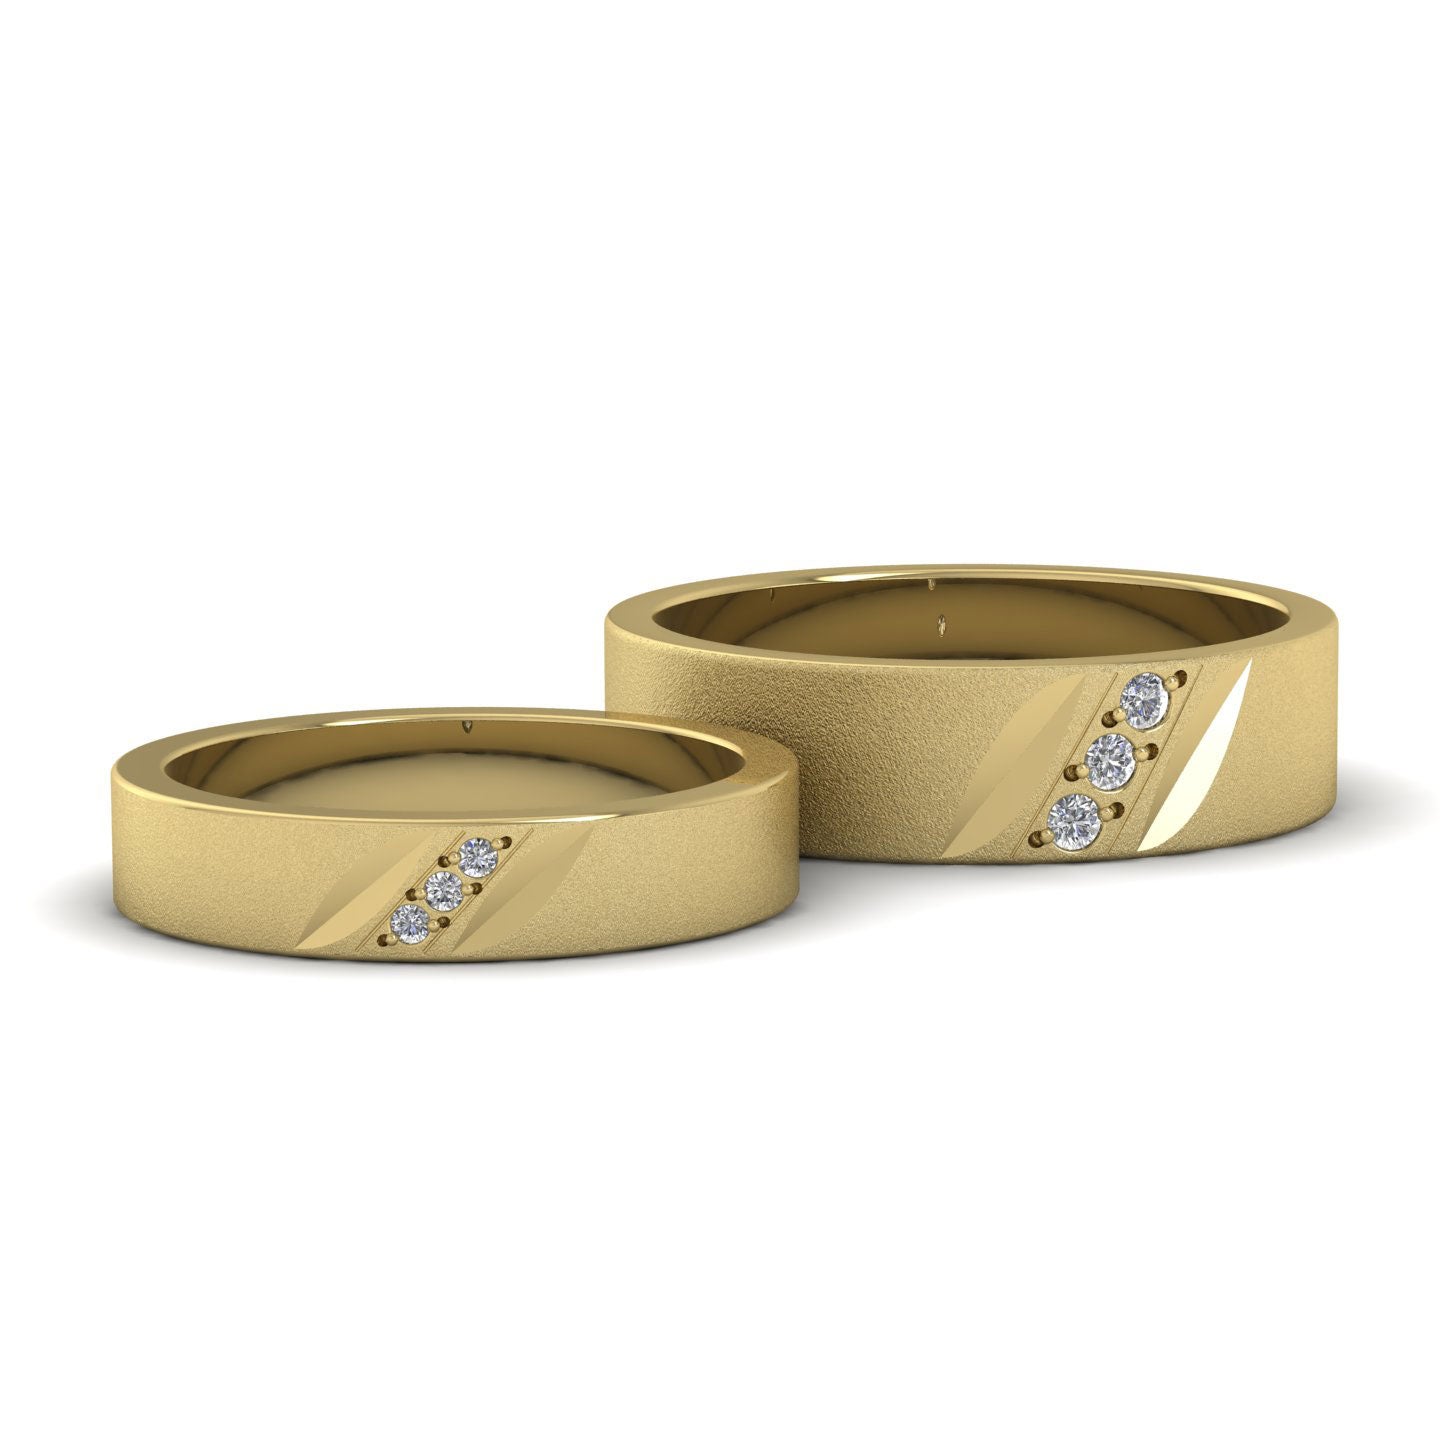 Diagonal Cut And Diamond Set 9ct Yellow Gold 4mm Flat Wedding Ring